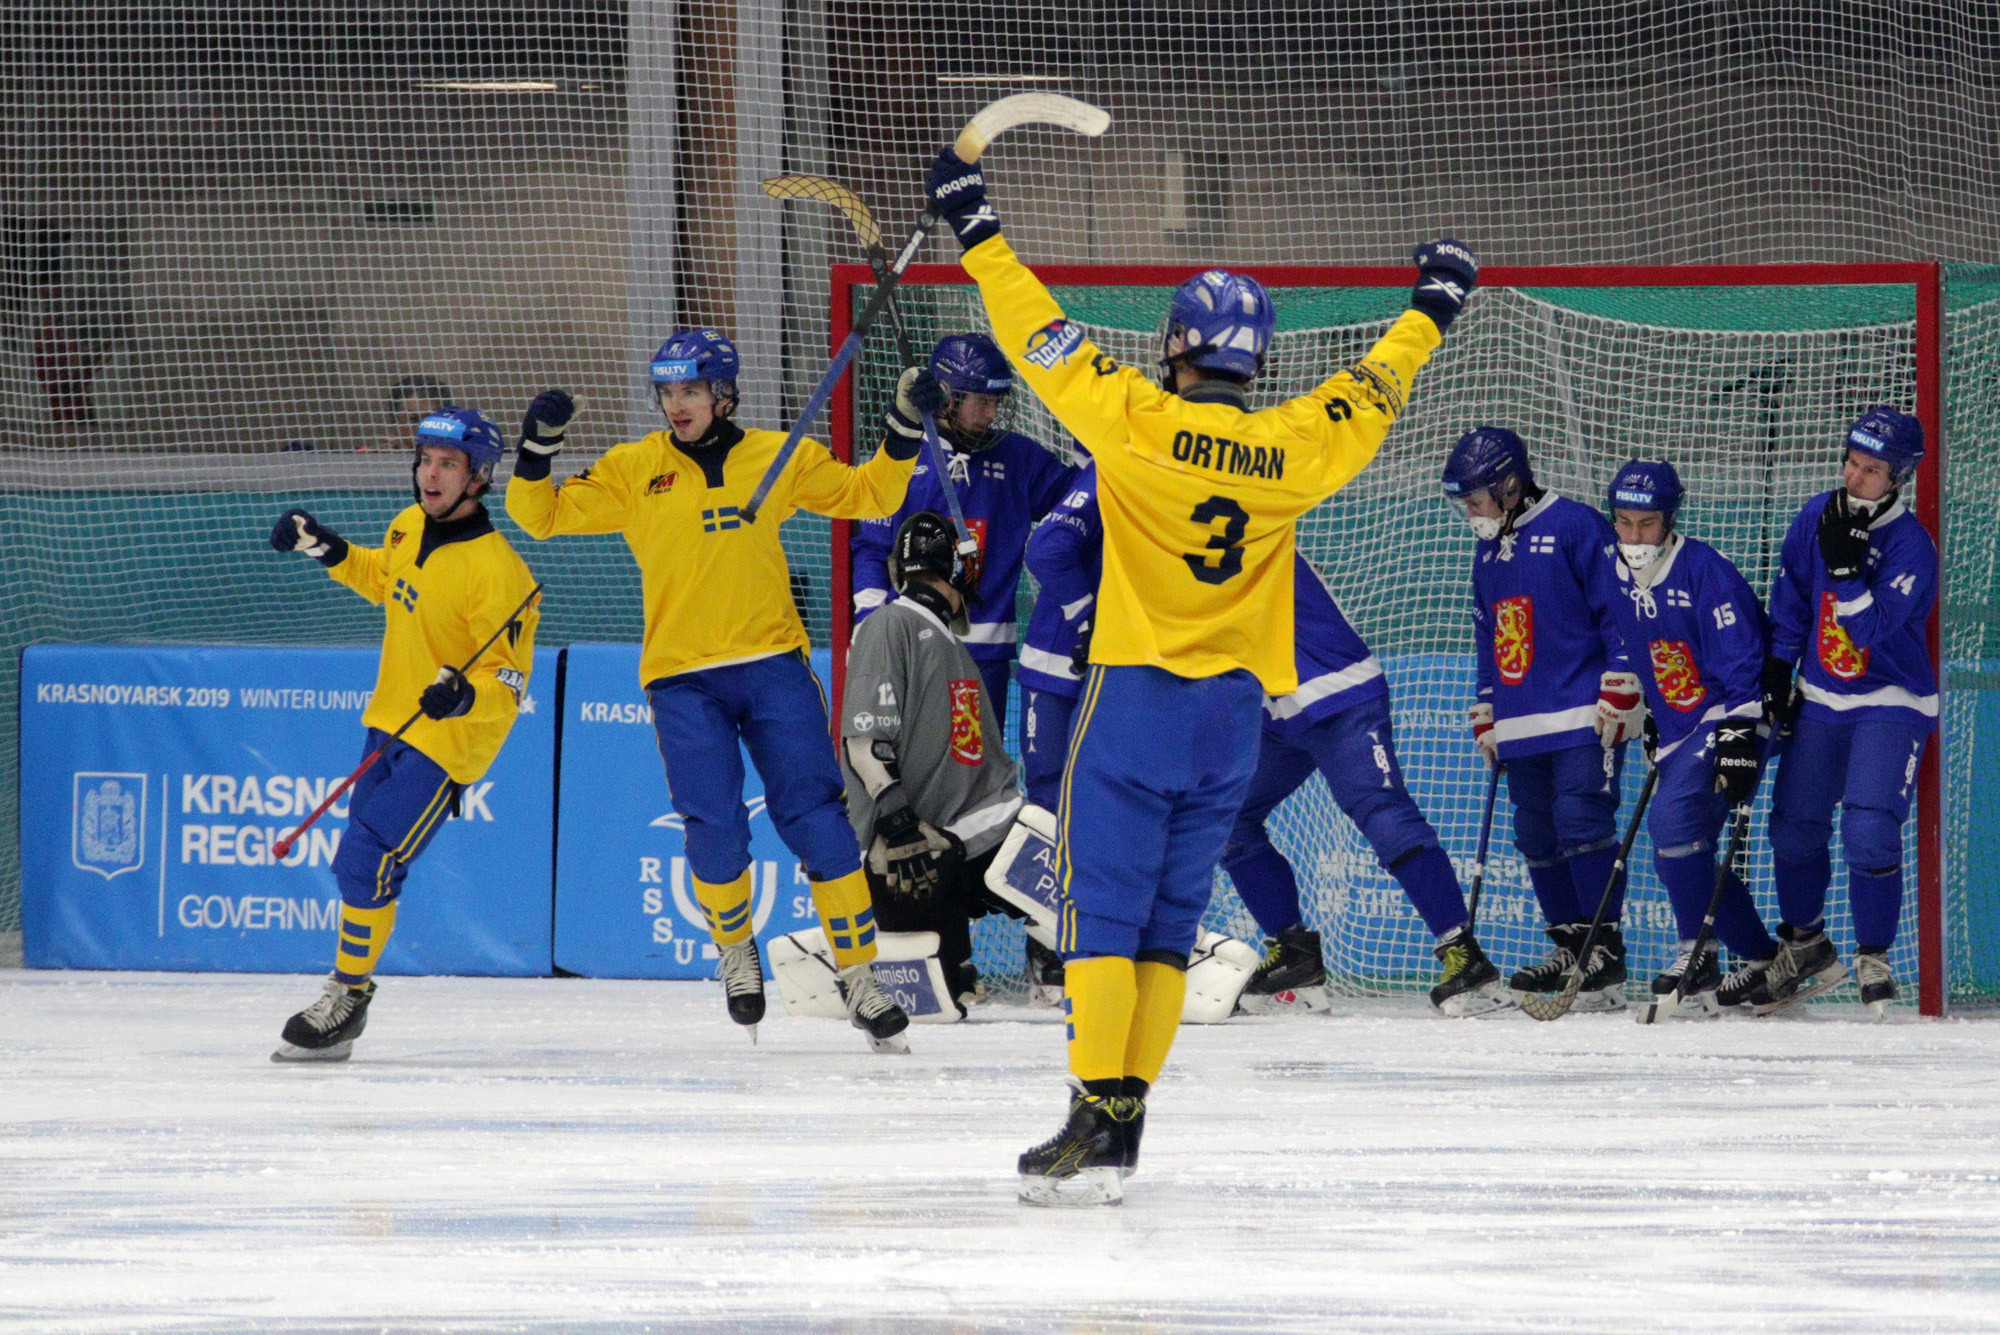 Sweden defeated Finland 10-1 in a preliminary round bandy match at the Yenisei Ice Stadium in Krasnoyarsk ©Krasnoyarsk 2019